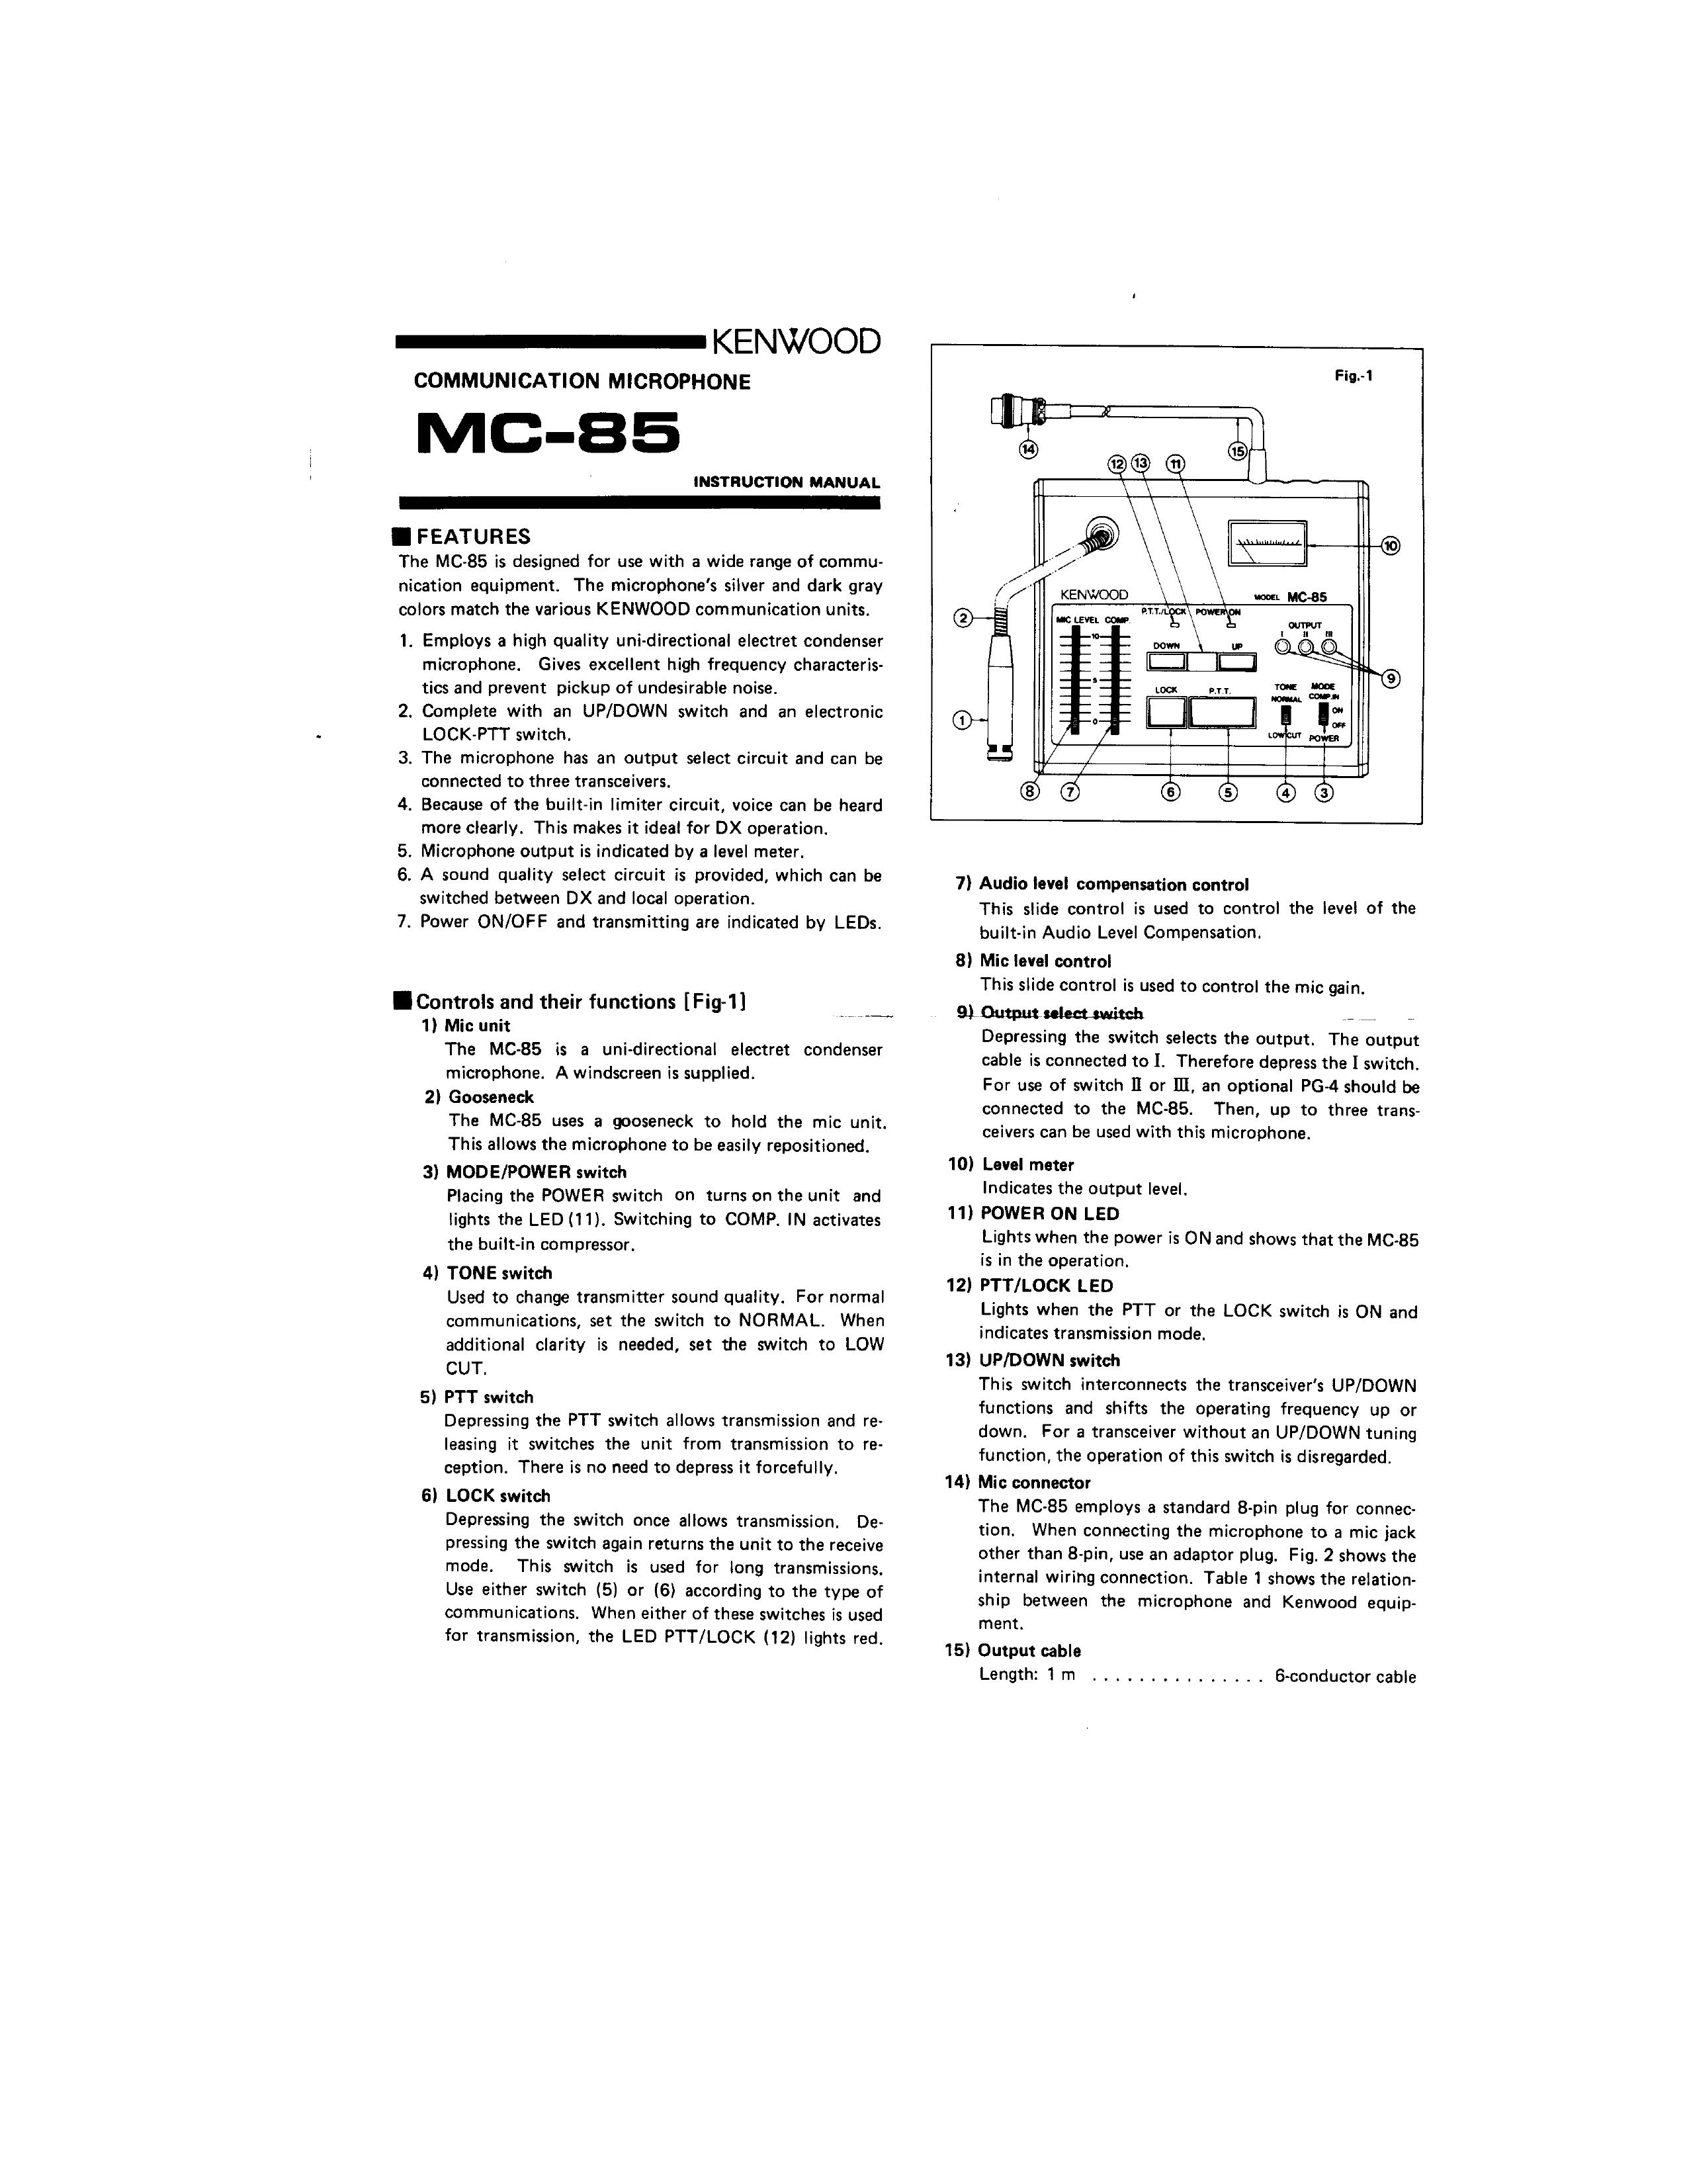 Kenwood MC-85 Microphone User Manual